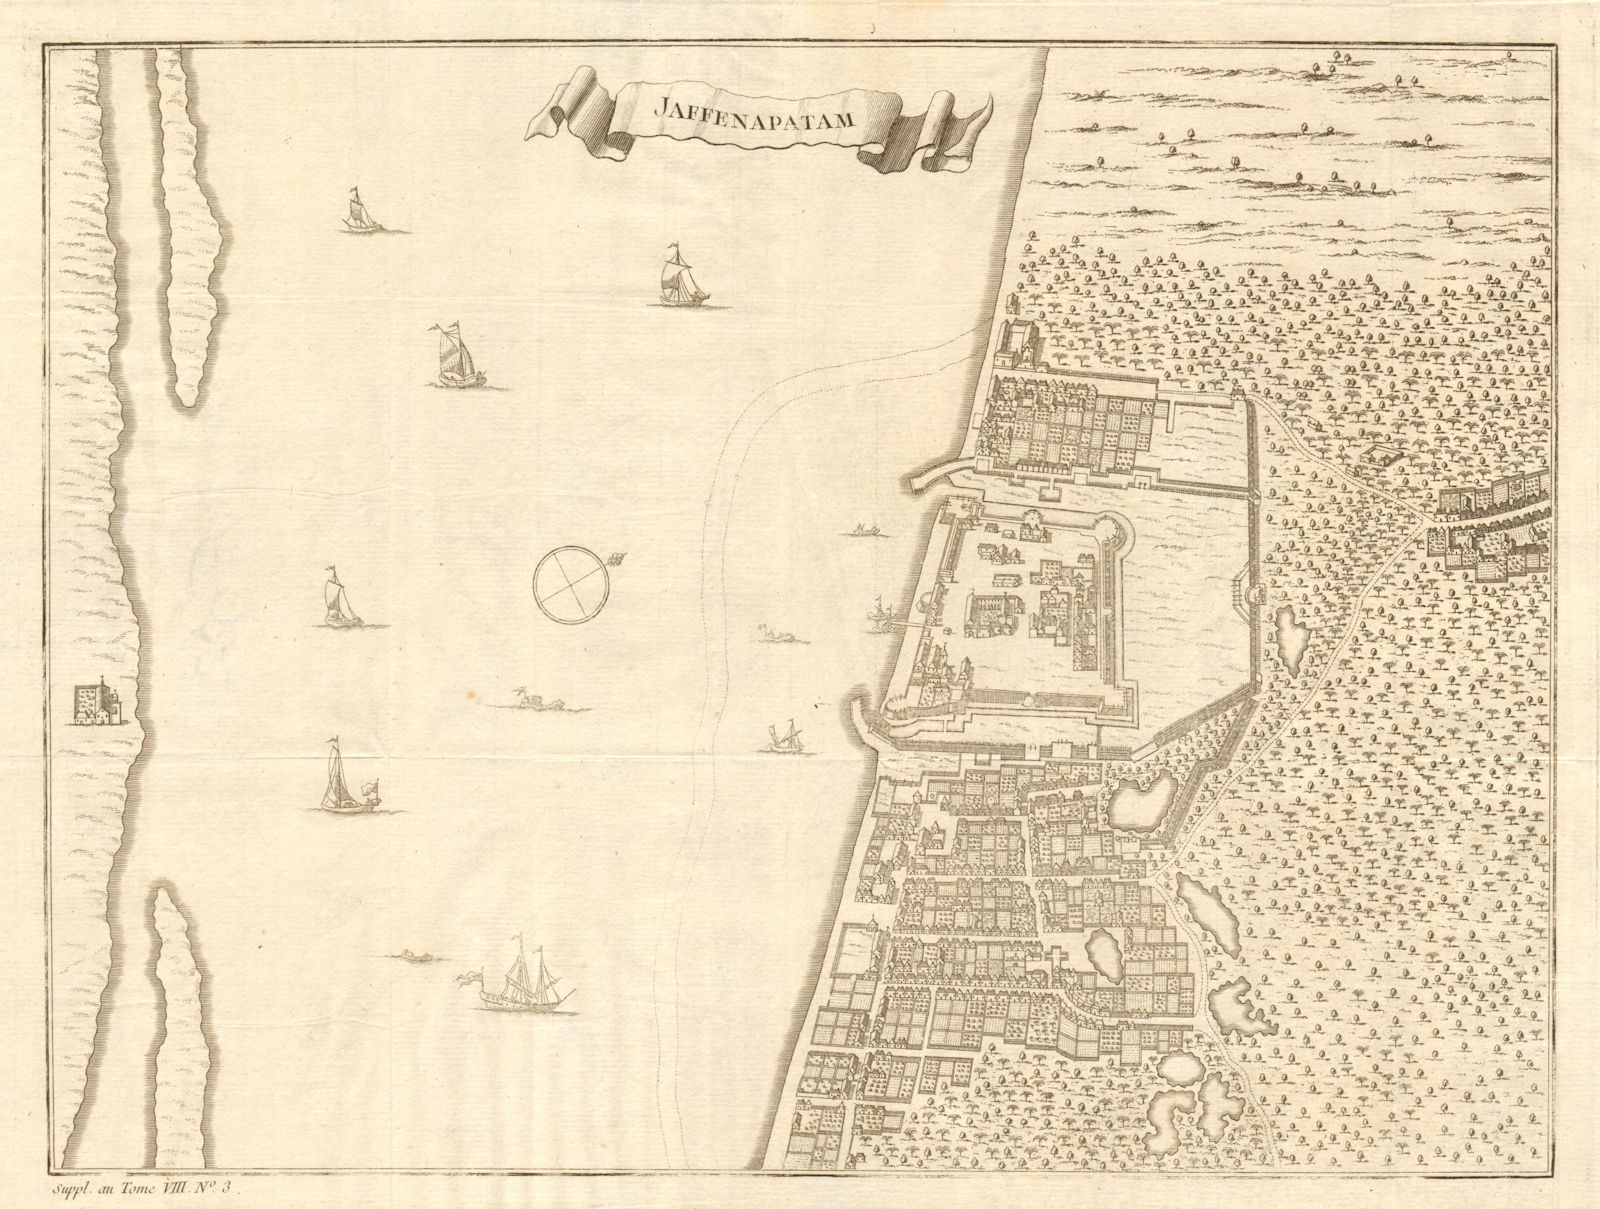 'Jaffenapatam'. Sri Lanka. Jaffna town city plan. BELLIN 1761 old antique map